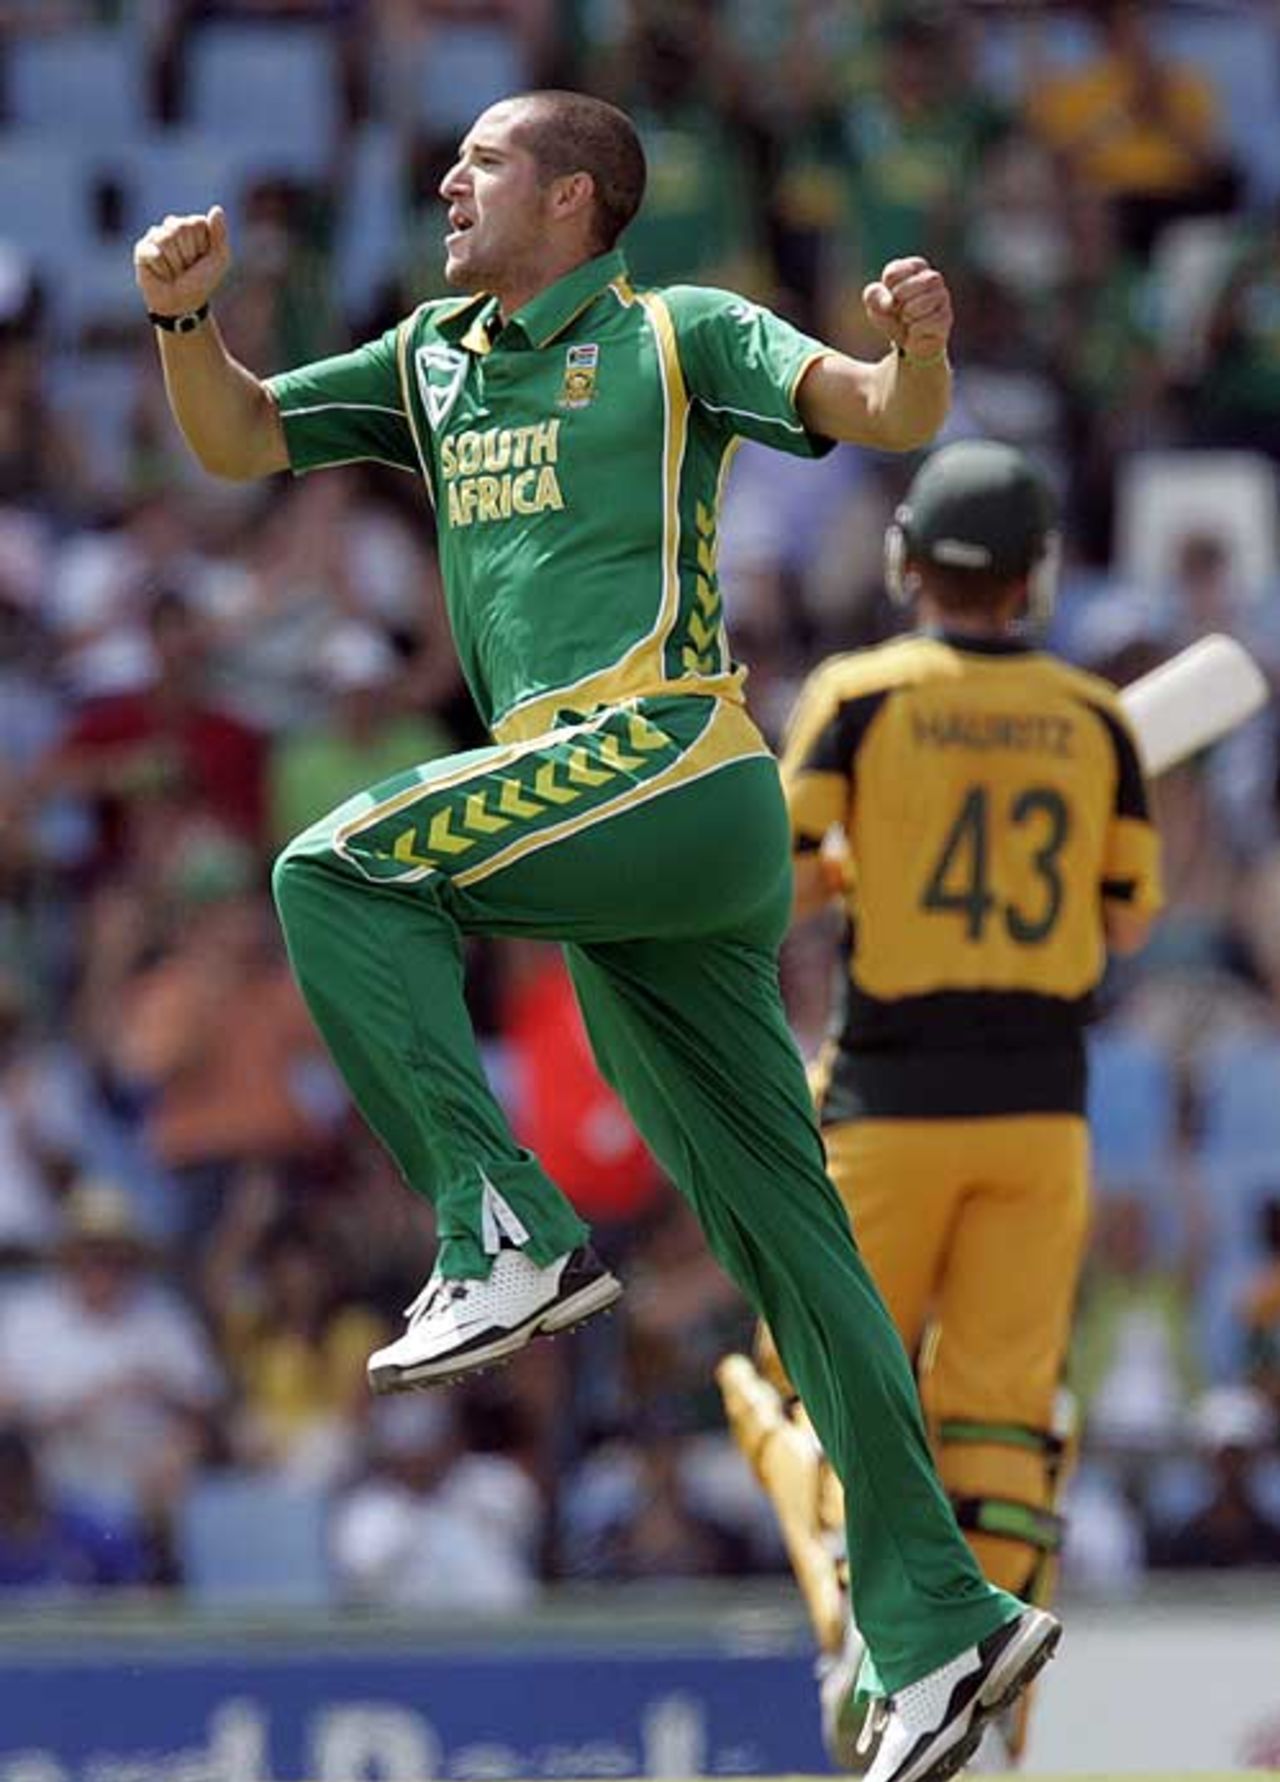 Wayne Parnell jumps after another wicket falls, South Africa v Australia, 2nd ODI, Centurion, April 5, 2009 